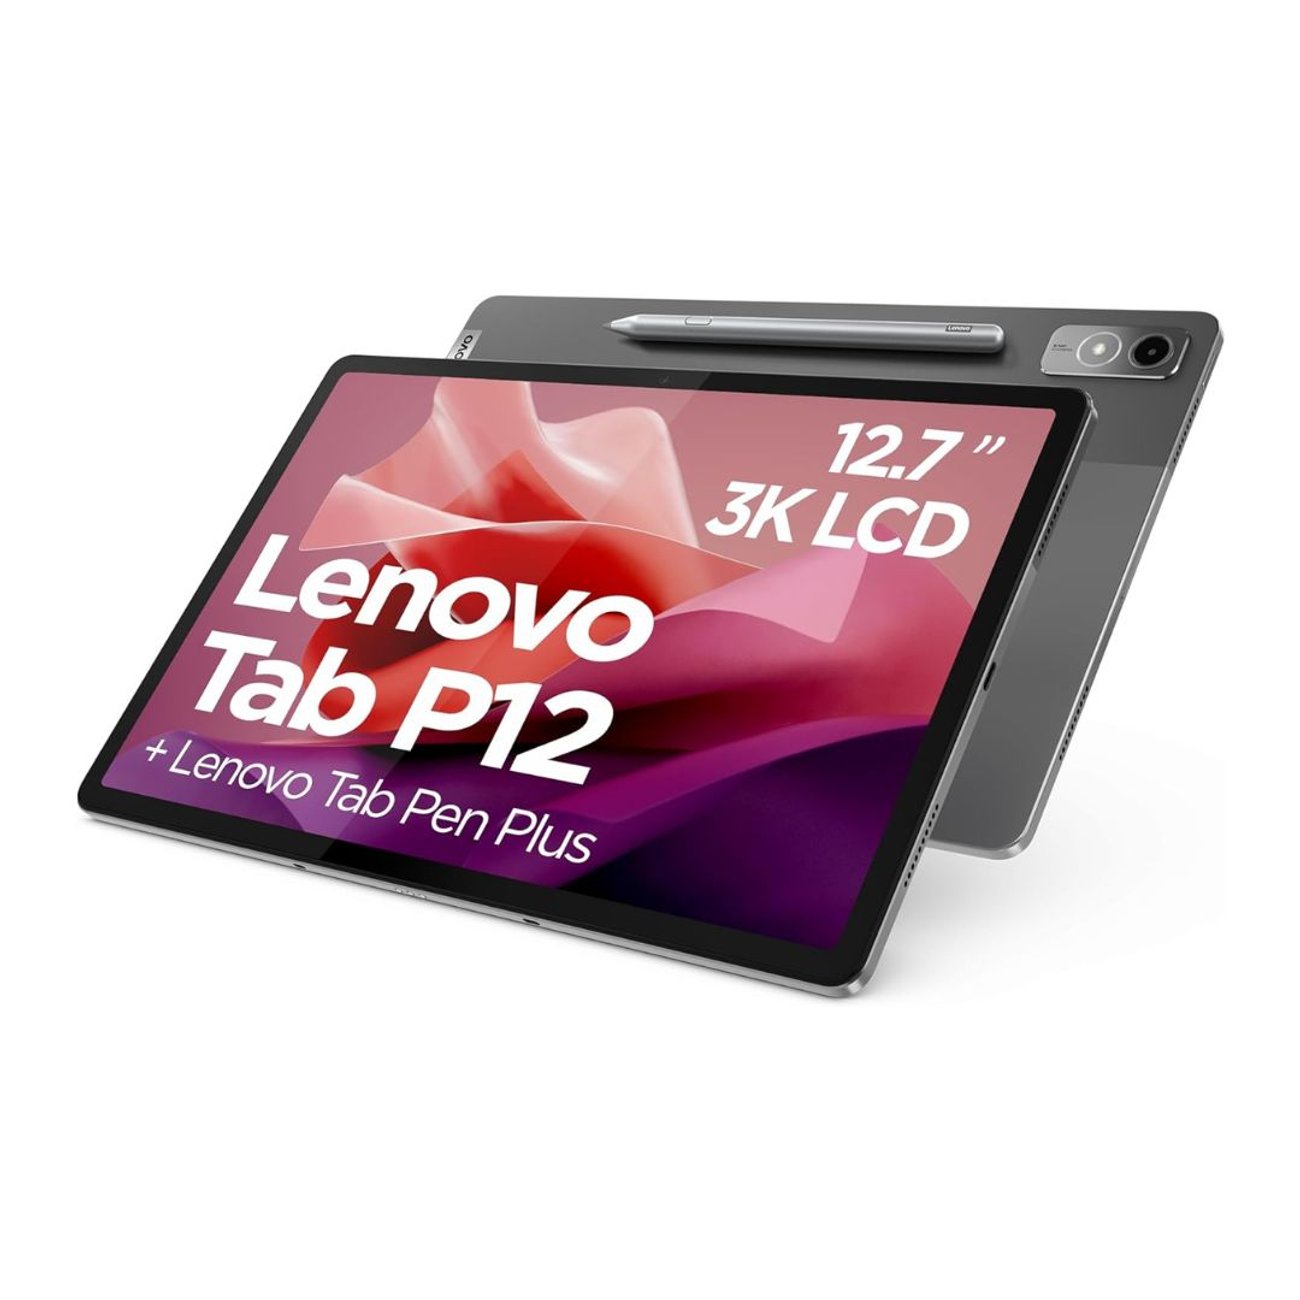 Lenovo Tab P12 Tablet